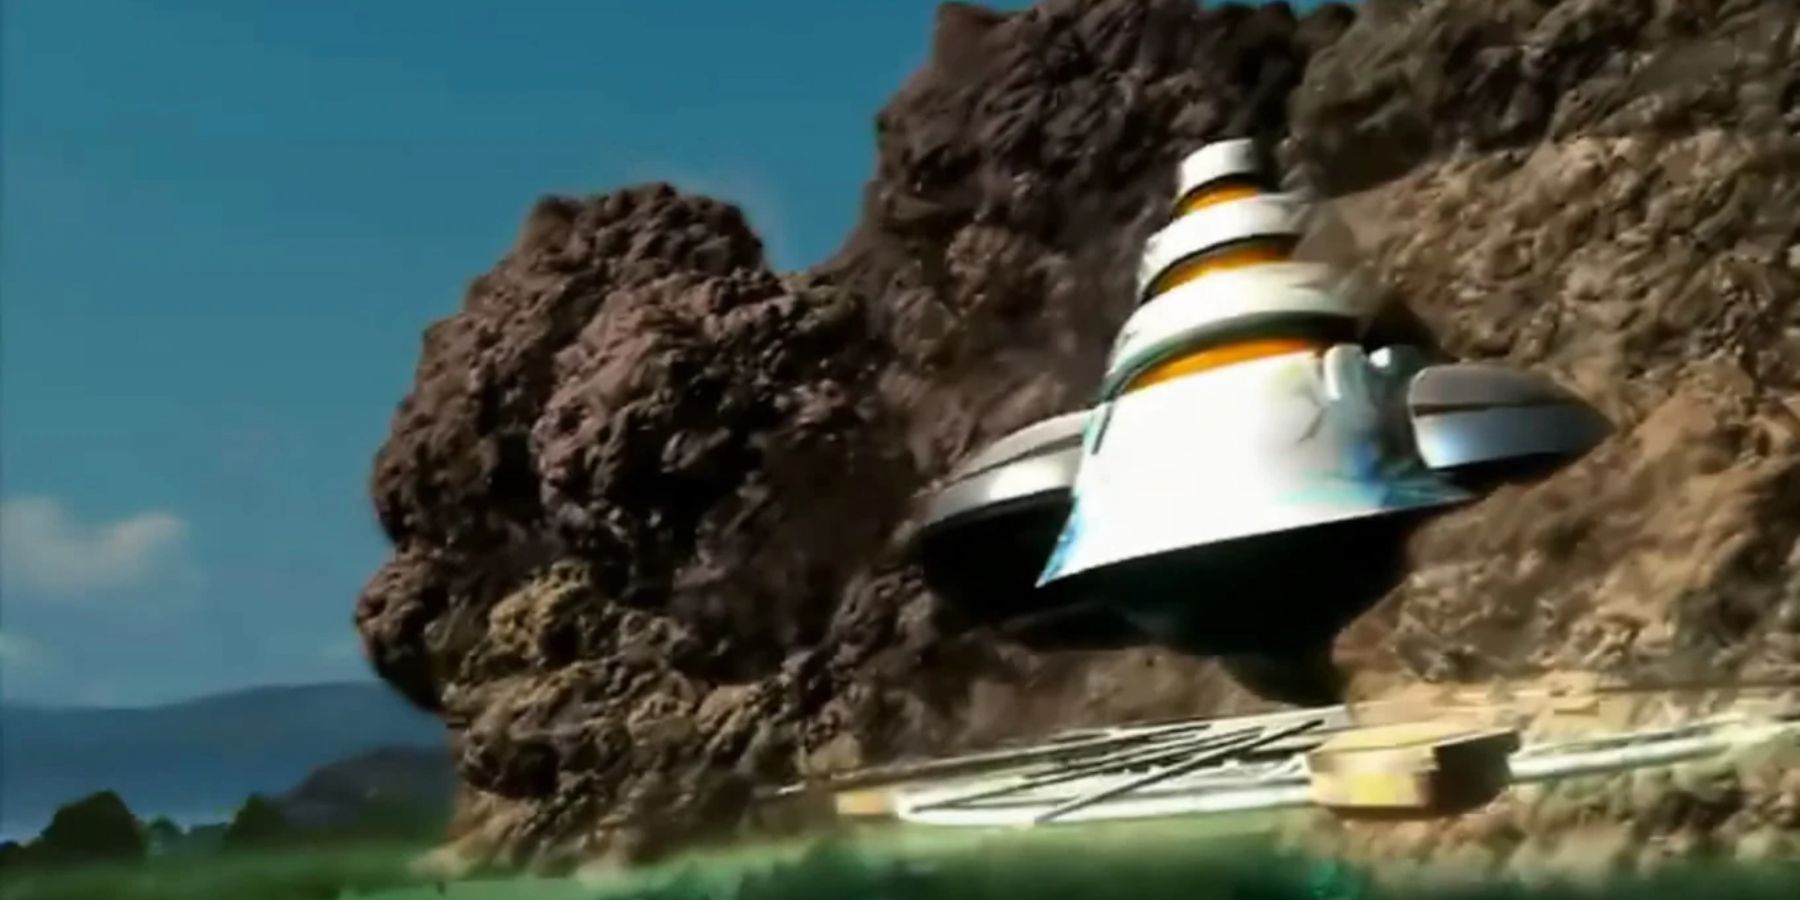 The Balamb Garden airship in Final Fantasy 8